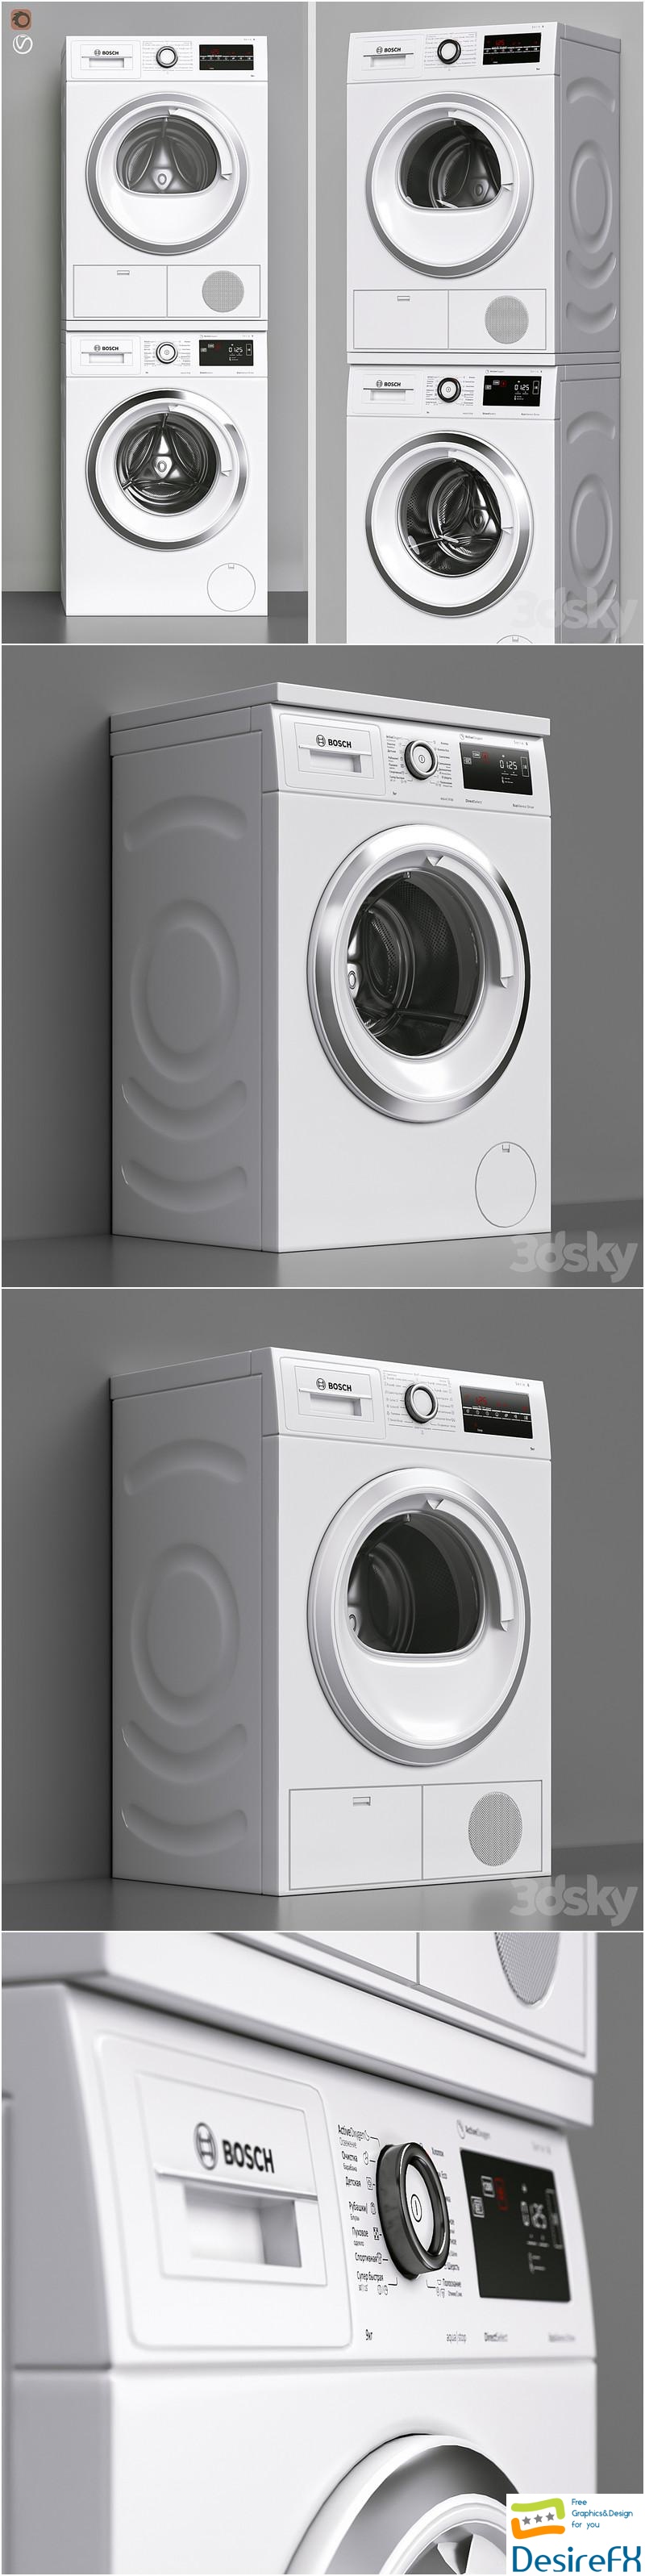 BOSCH washing machine and dryer 3D Model